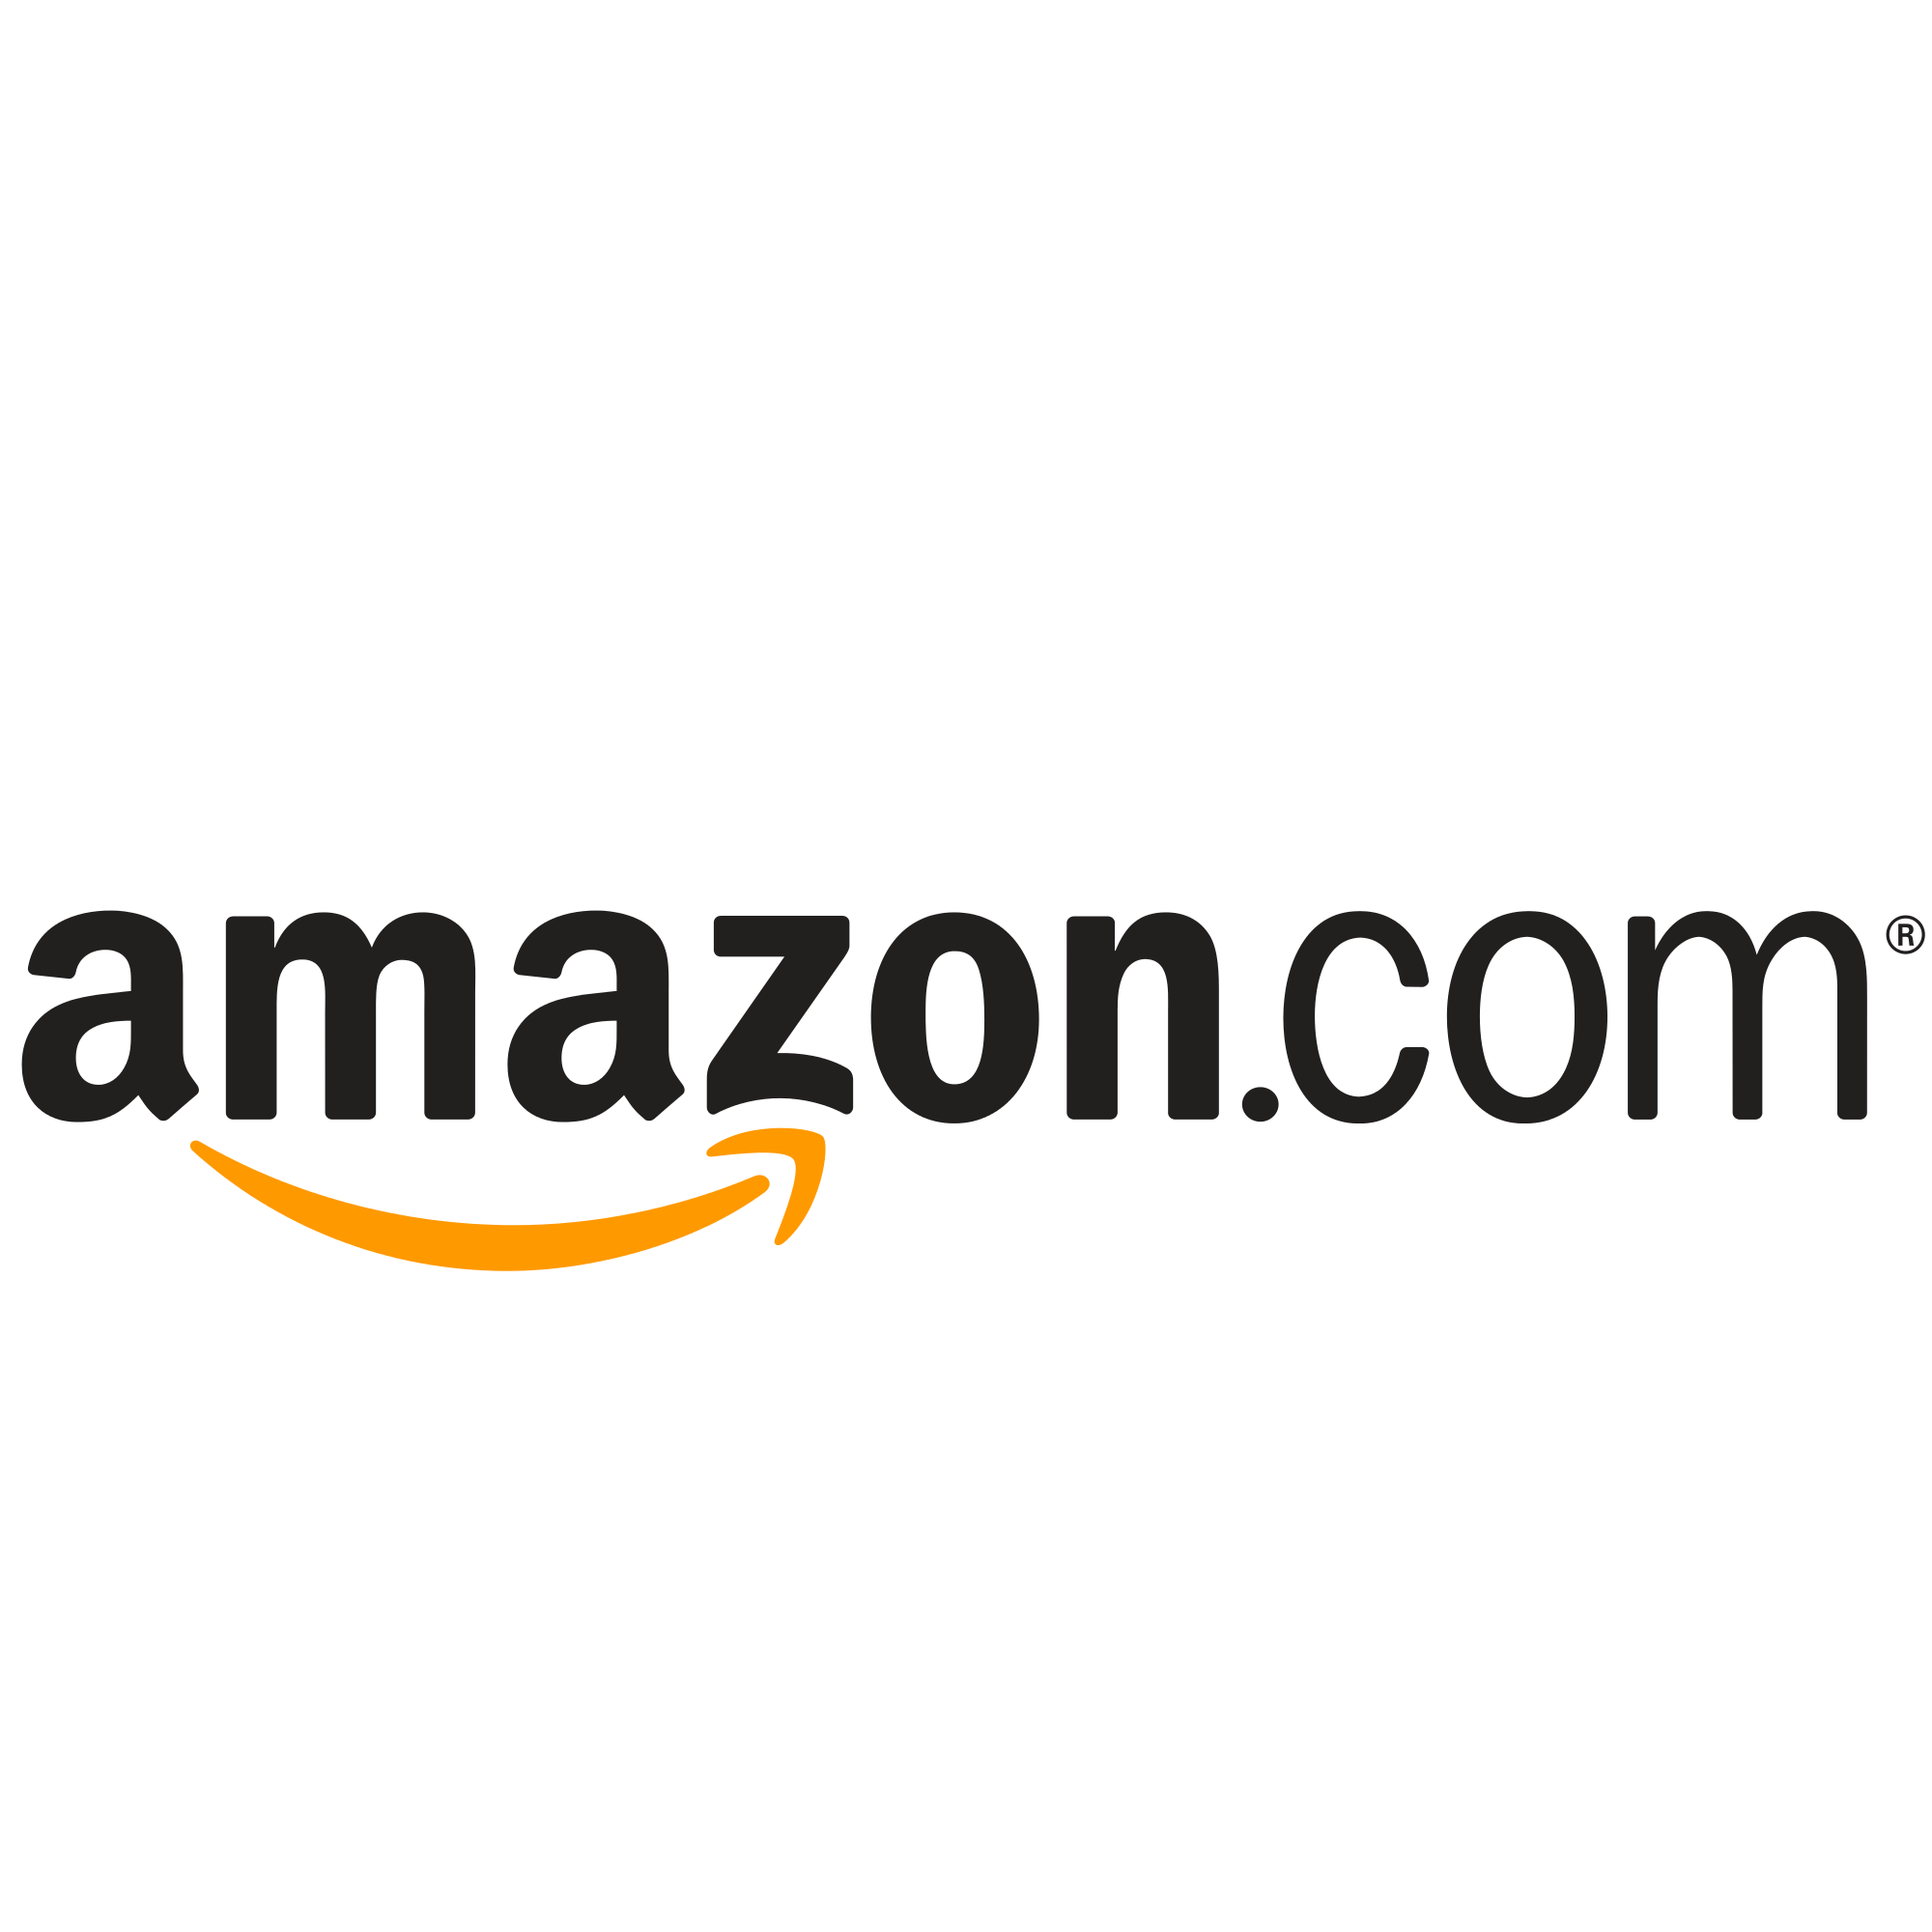 Amazon-com-Logo.png